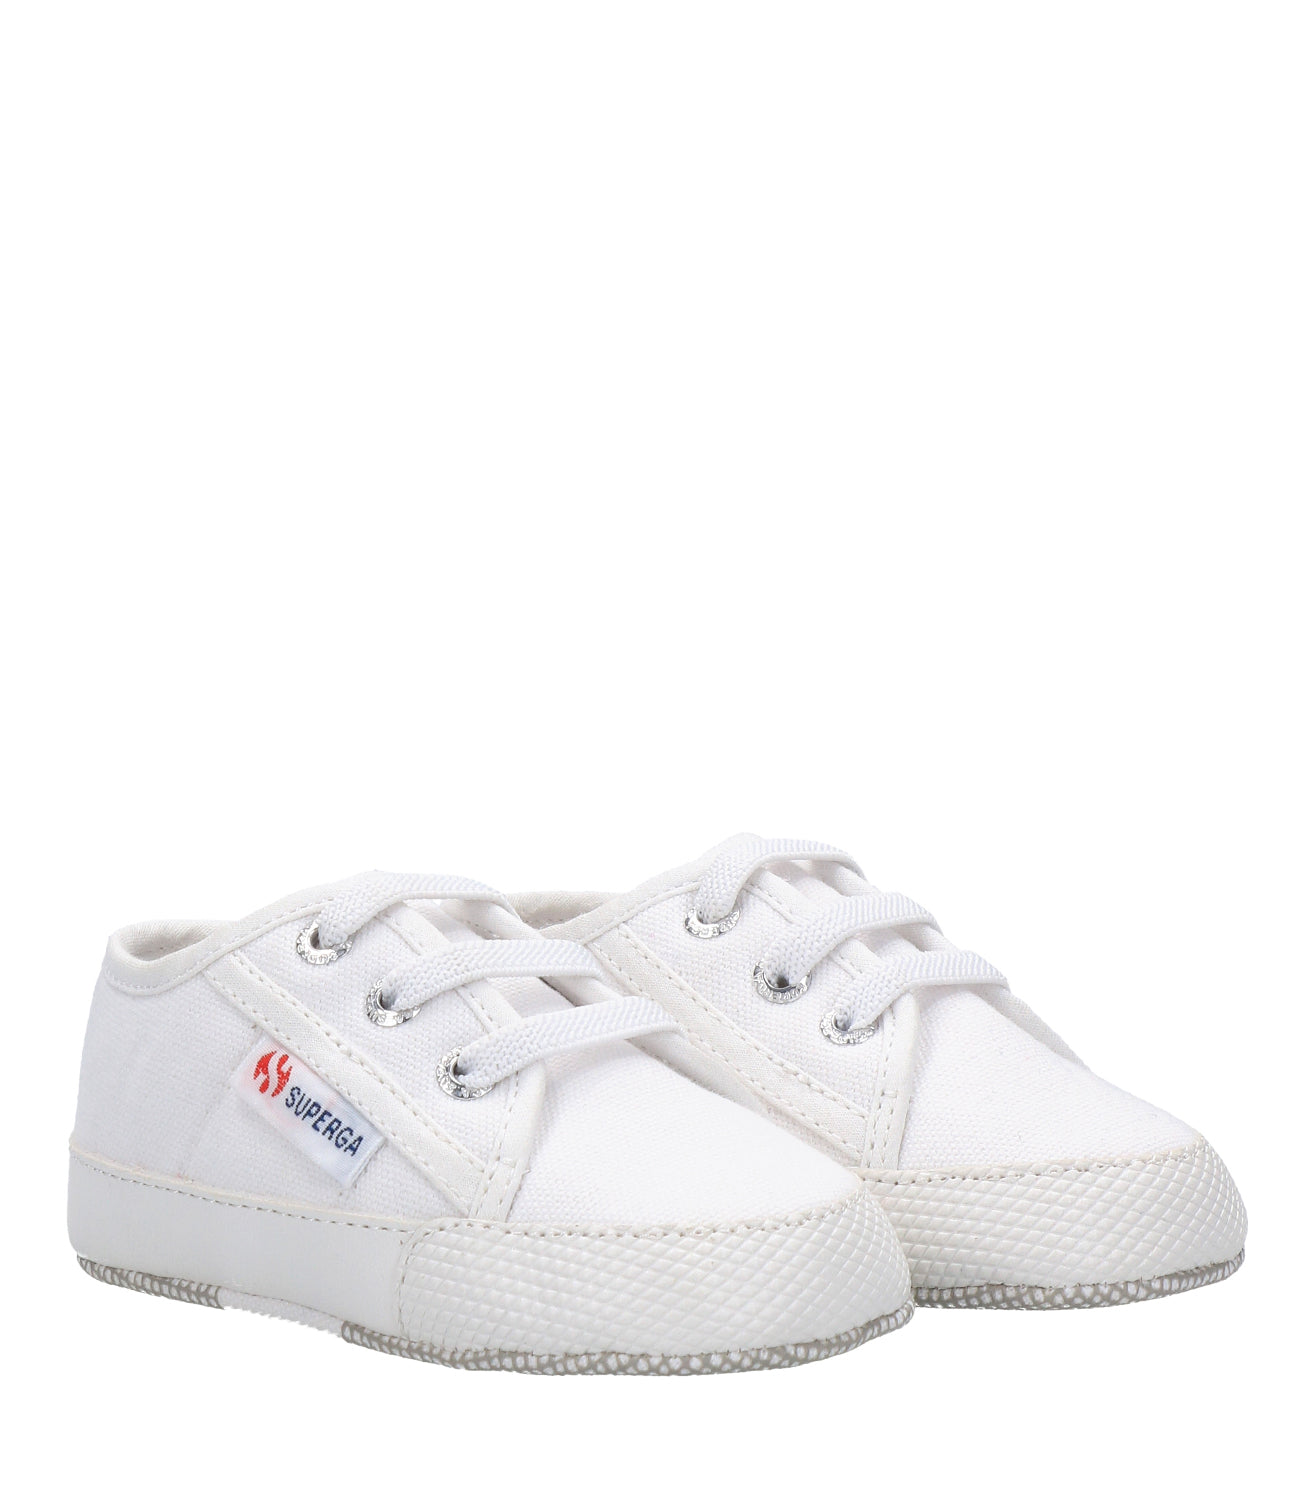 Superga Kids | Sneakers 4006 White